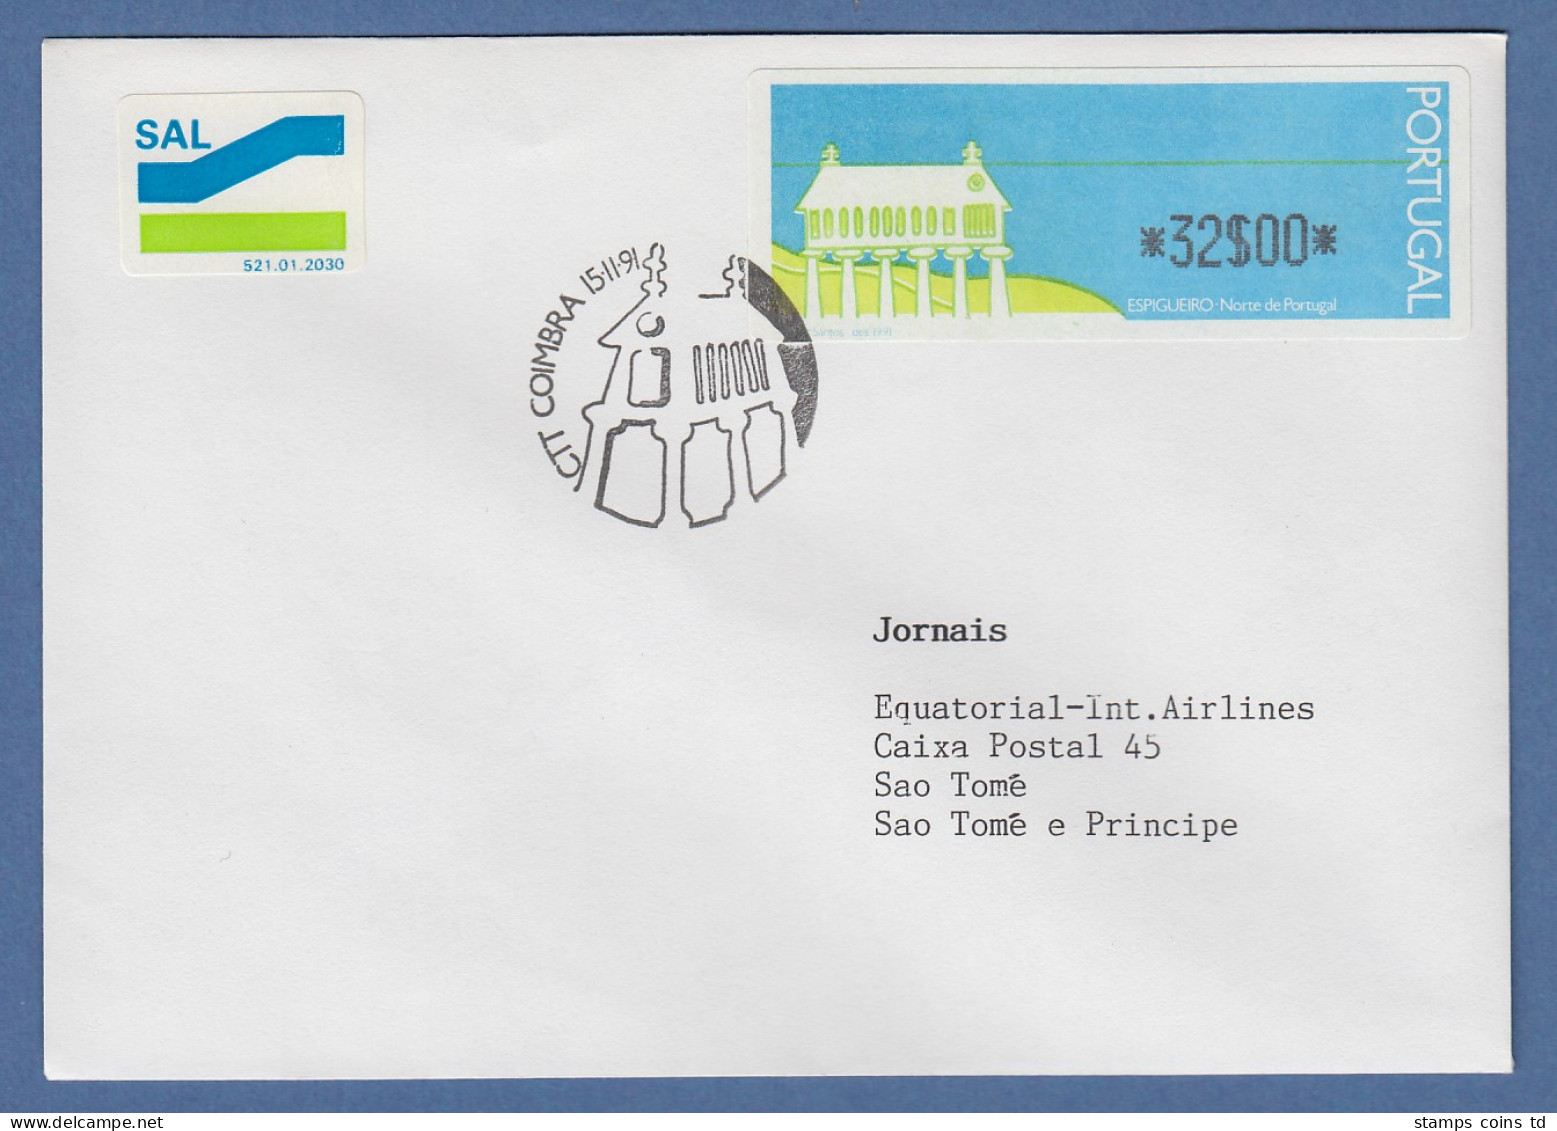 Portugal 1991 ATM Espigueiro Mi.-Nr. 3 Wert 32$00 Auf FDC Mit ET-O Coimbra - Vignette [ATM]